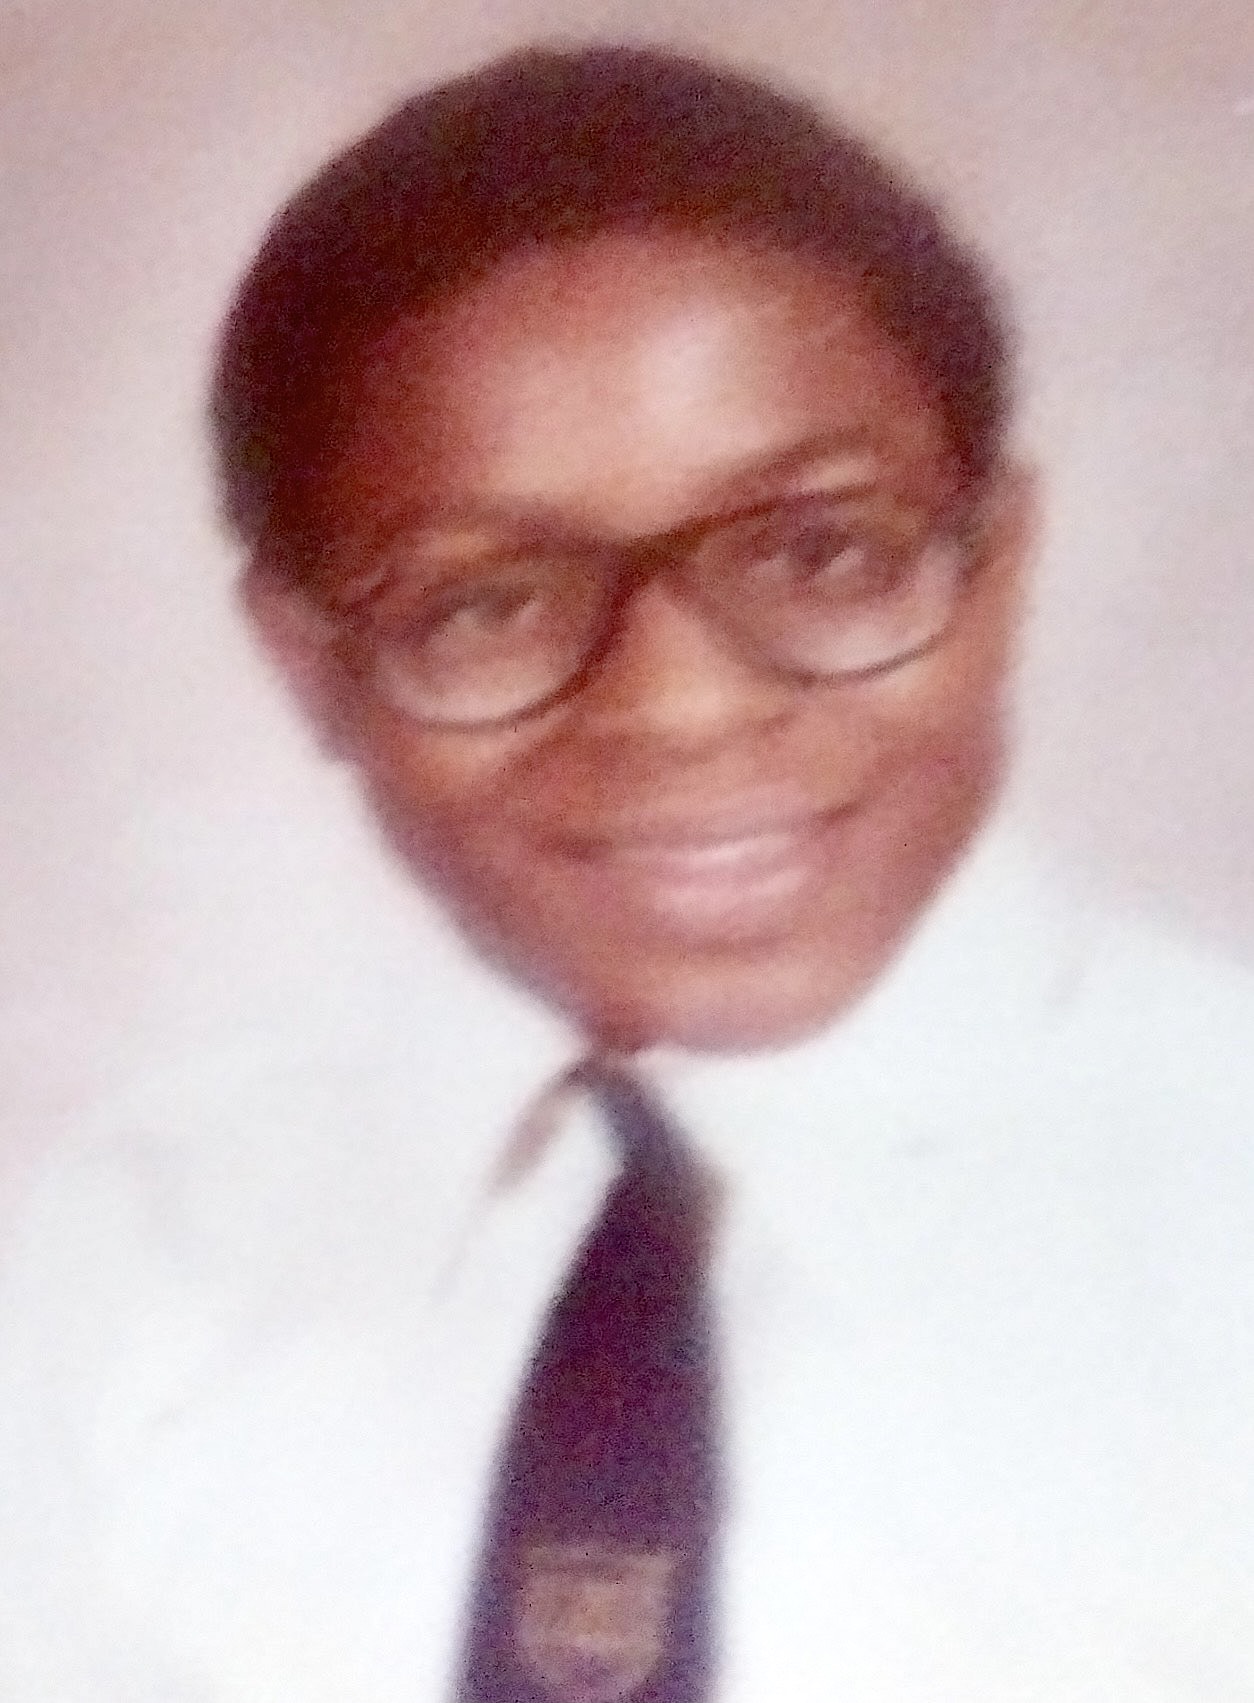 Robert attending Saint Aloysius Catholic School at 9 years old, Baton Rouge, LA. Photo courtesy of Robert Arrington.